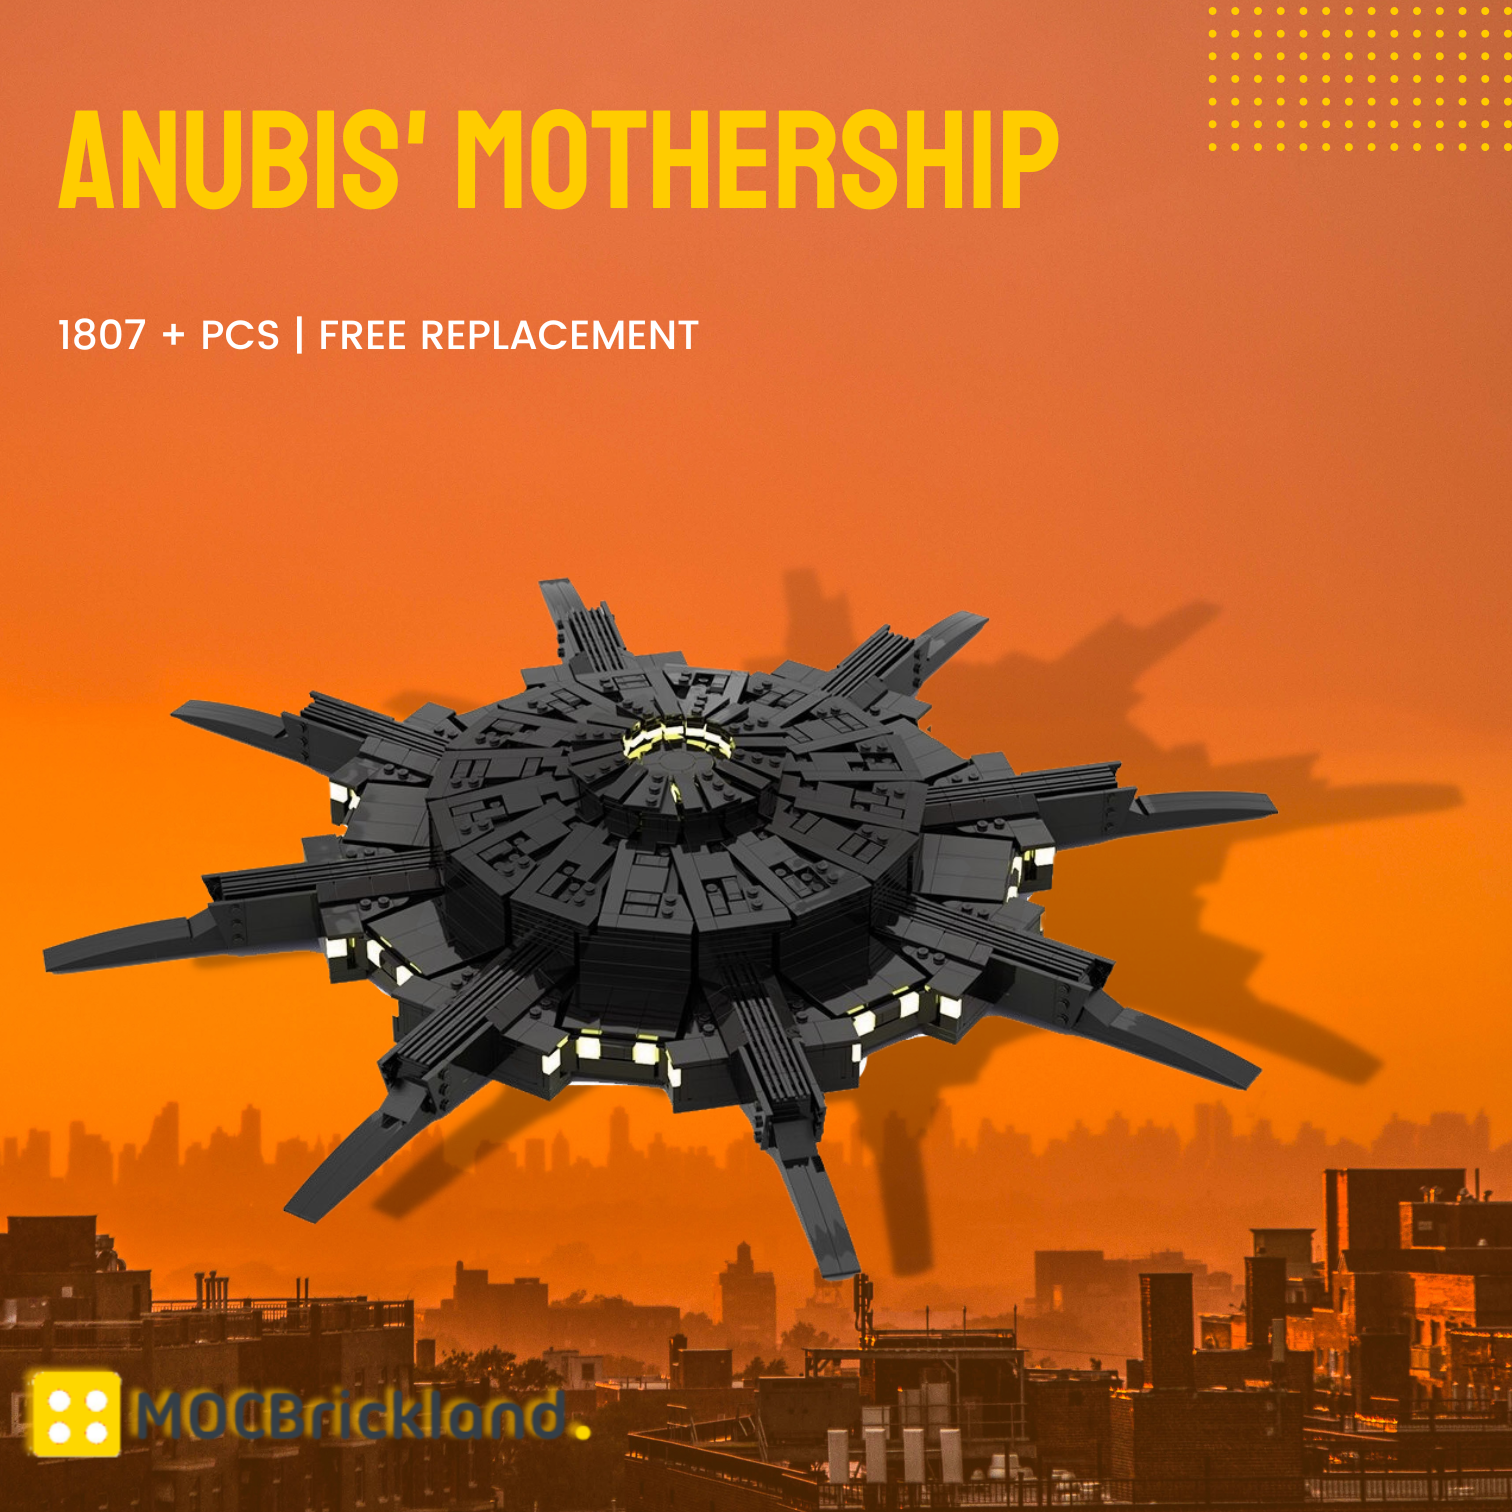 Space MOC-126159 Anubis’ Mothership MOCBRICKLAND